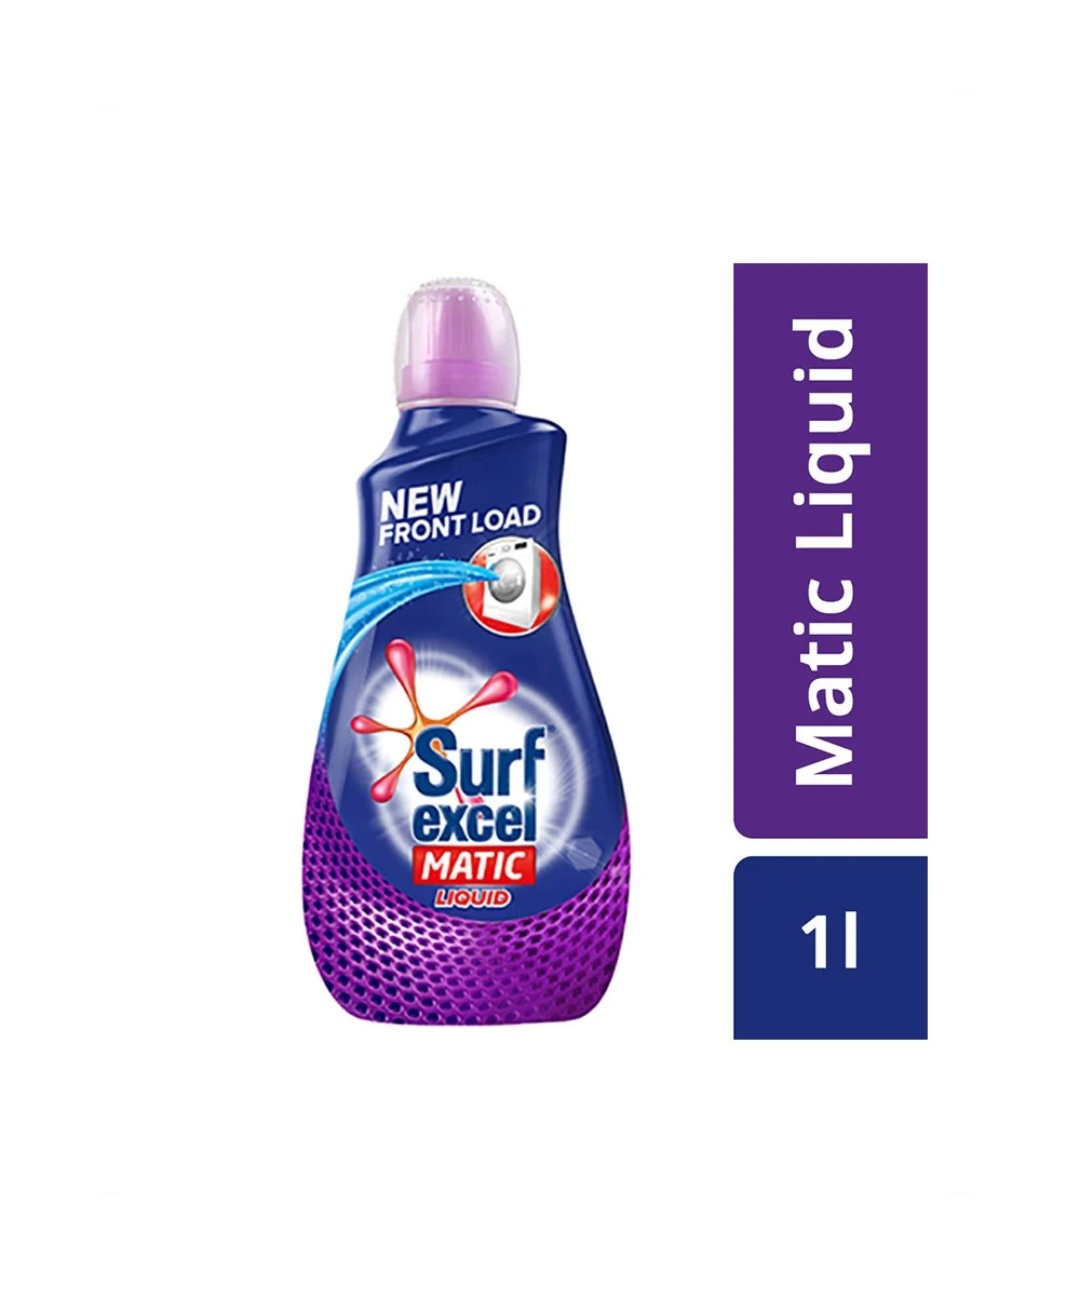 Surf Excel Matic Front Load Liquid Detergent, 1 lit